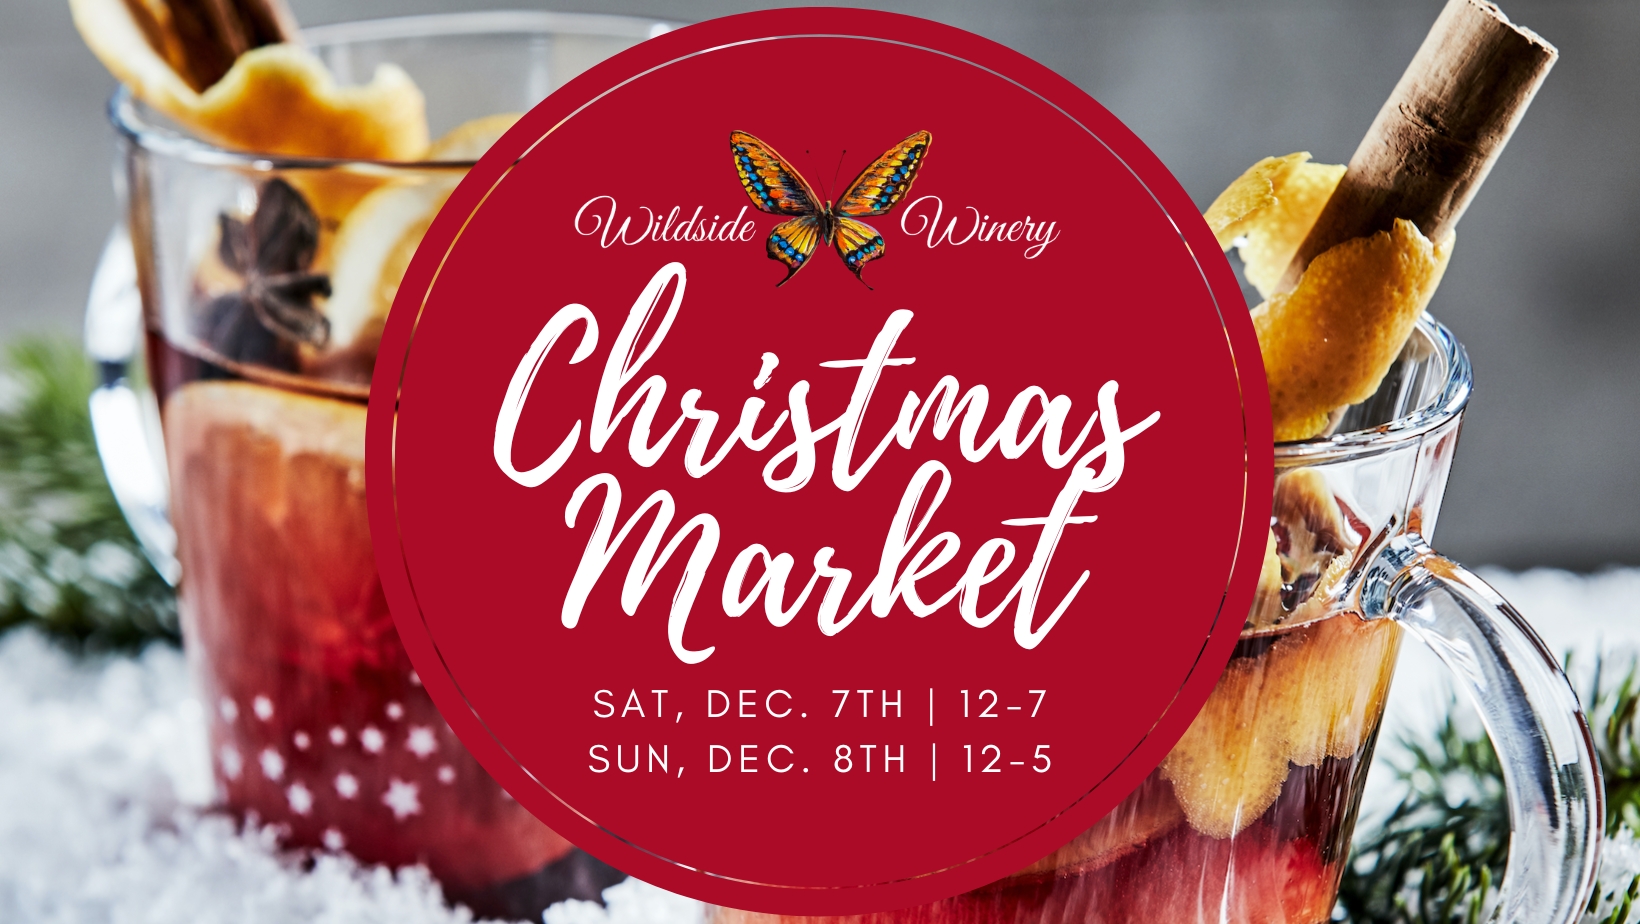 24 Christmas Market @ Wildside cover image